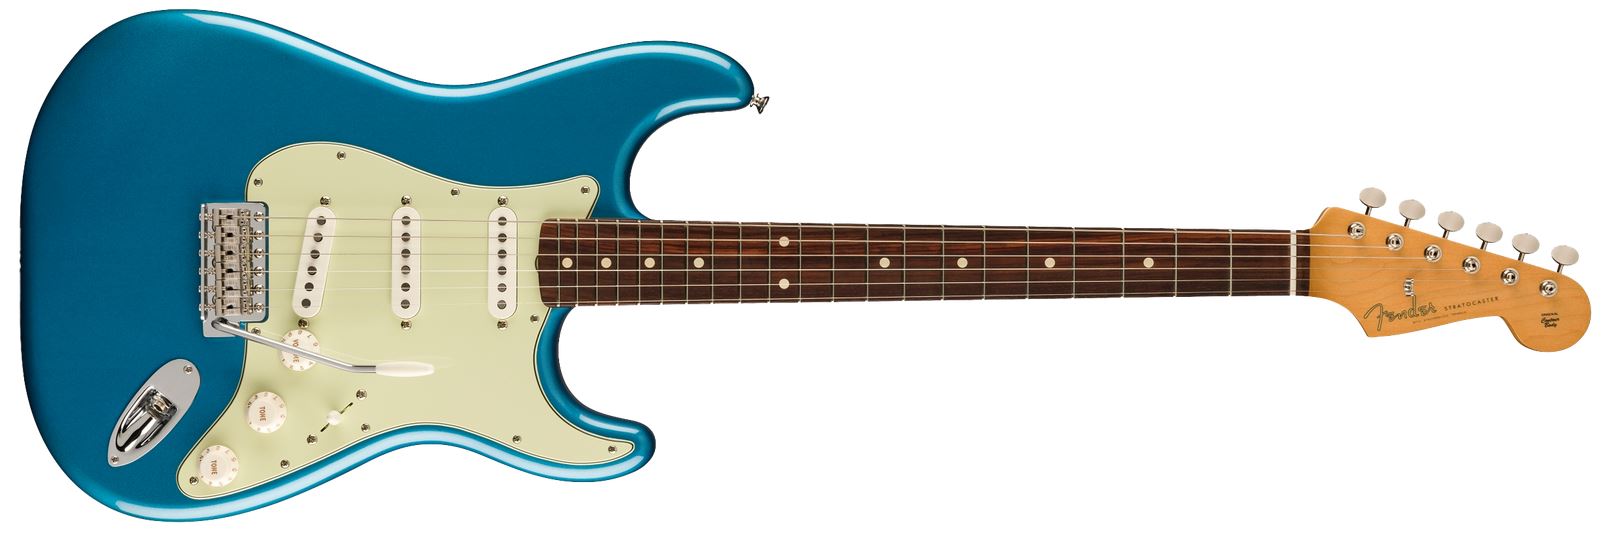 Vyhraj gitaru Fender Stratocaster